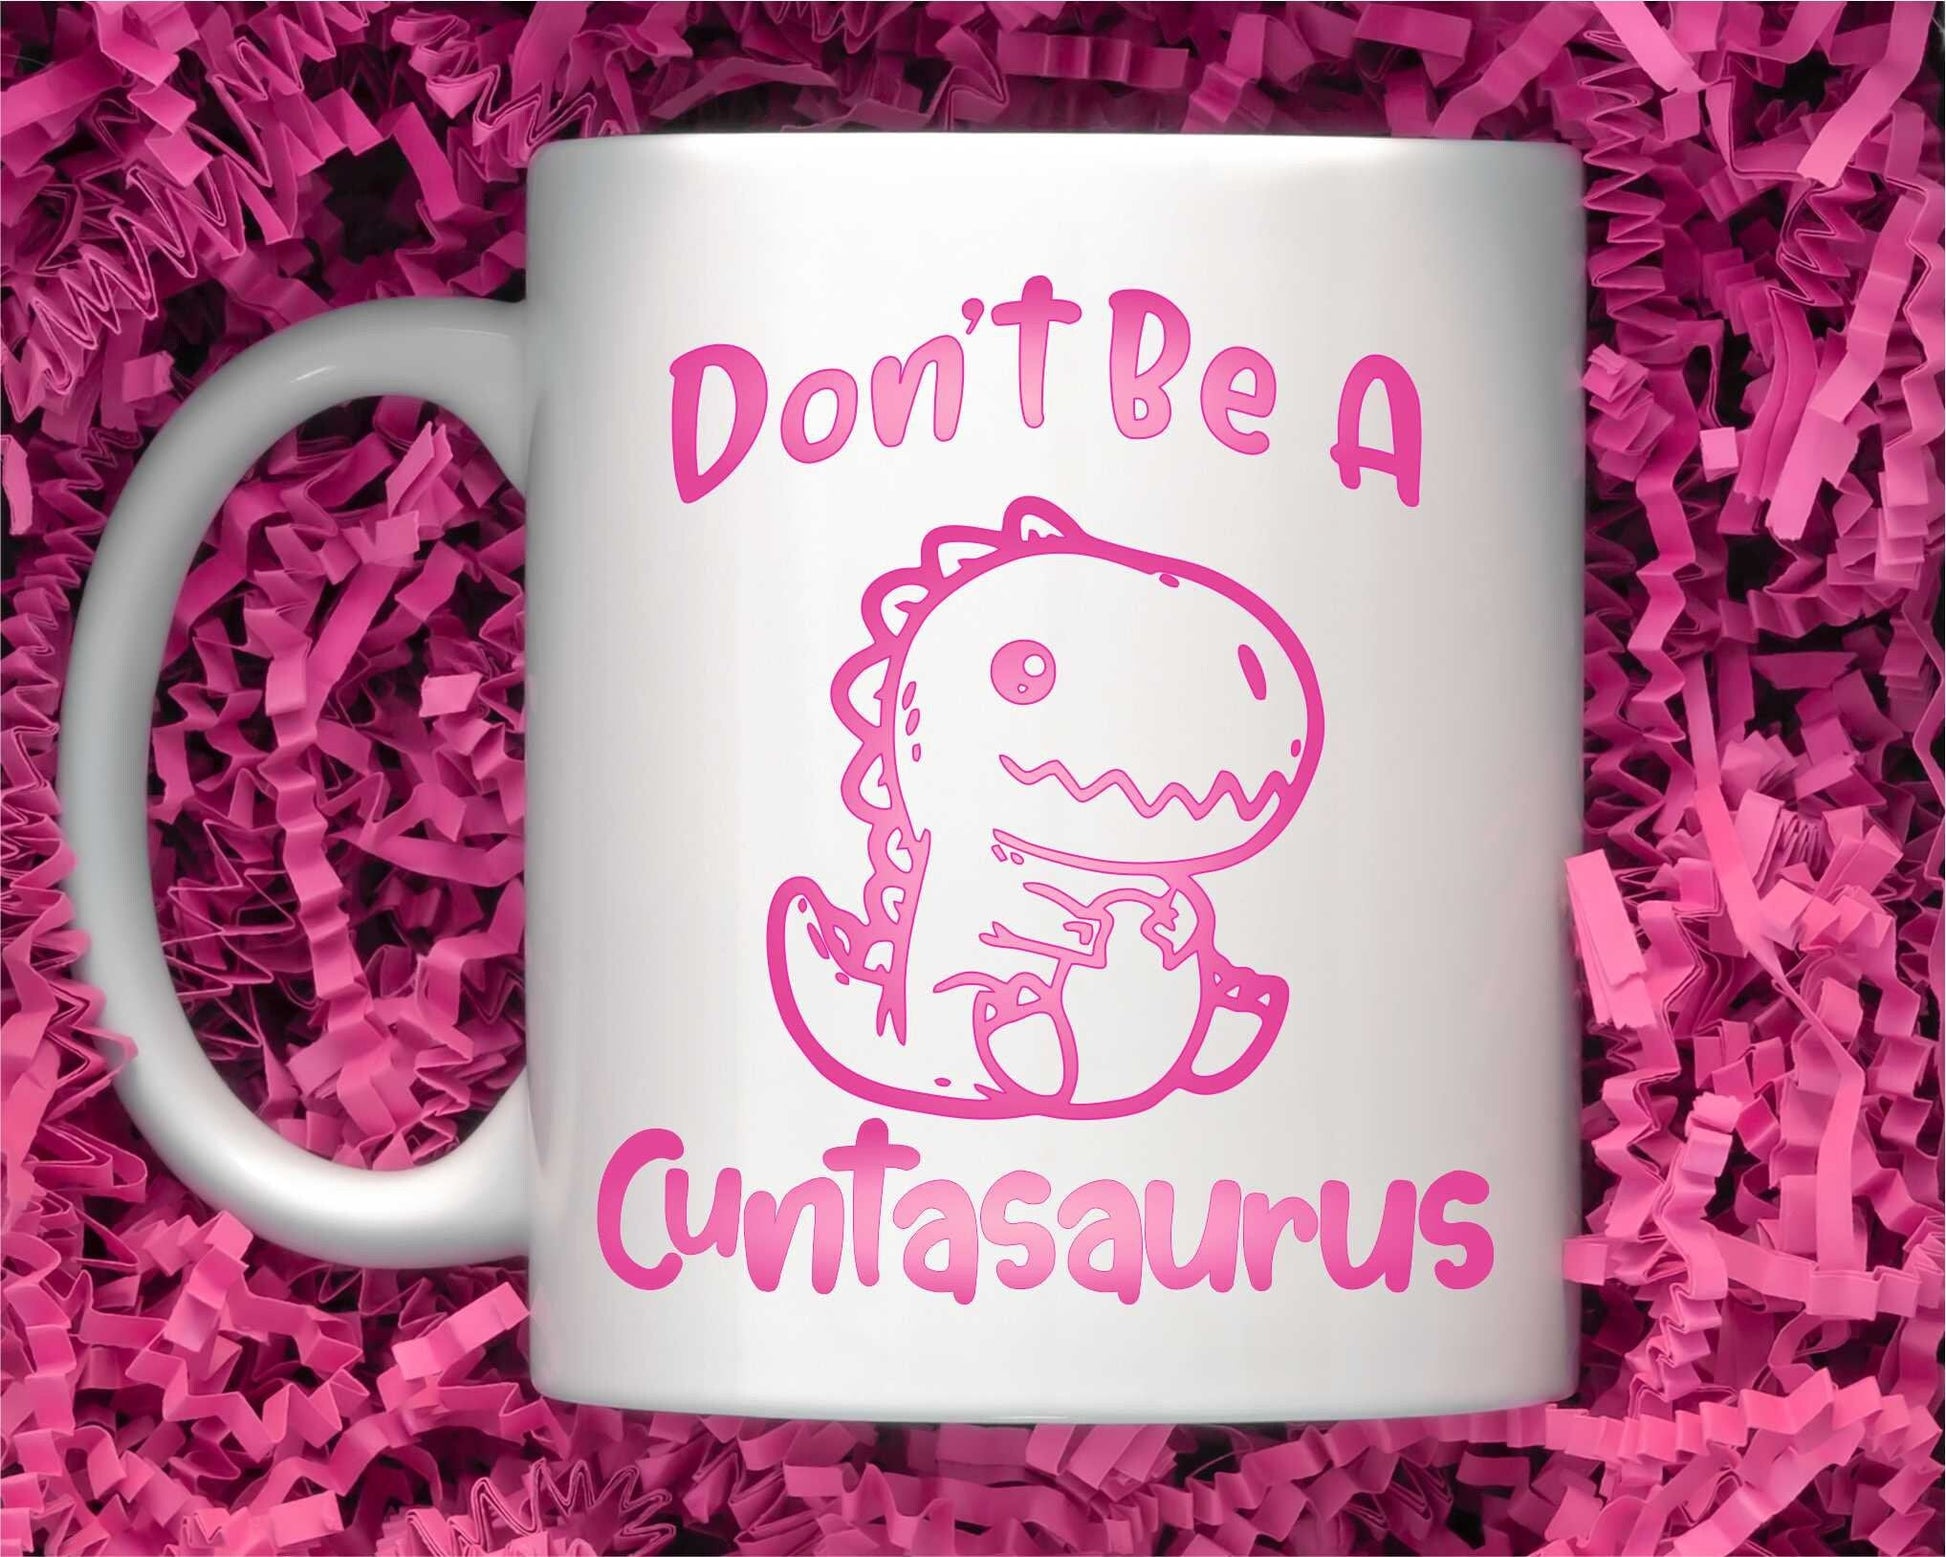 Cuntasaurus Mug, Don't be a cuntasaurus bitchy asshole inappropriate adult humor cute dinosaur woman power pms mug gift for girlfriend - SBS T Shop